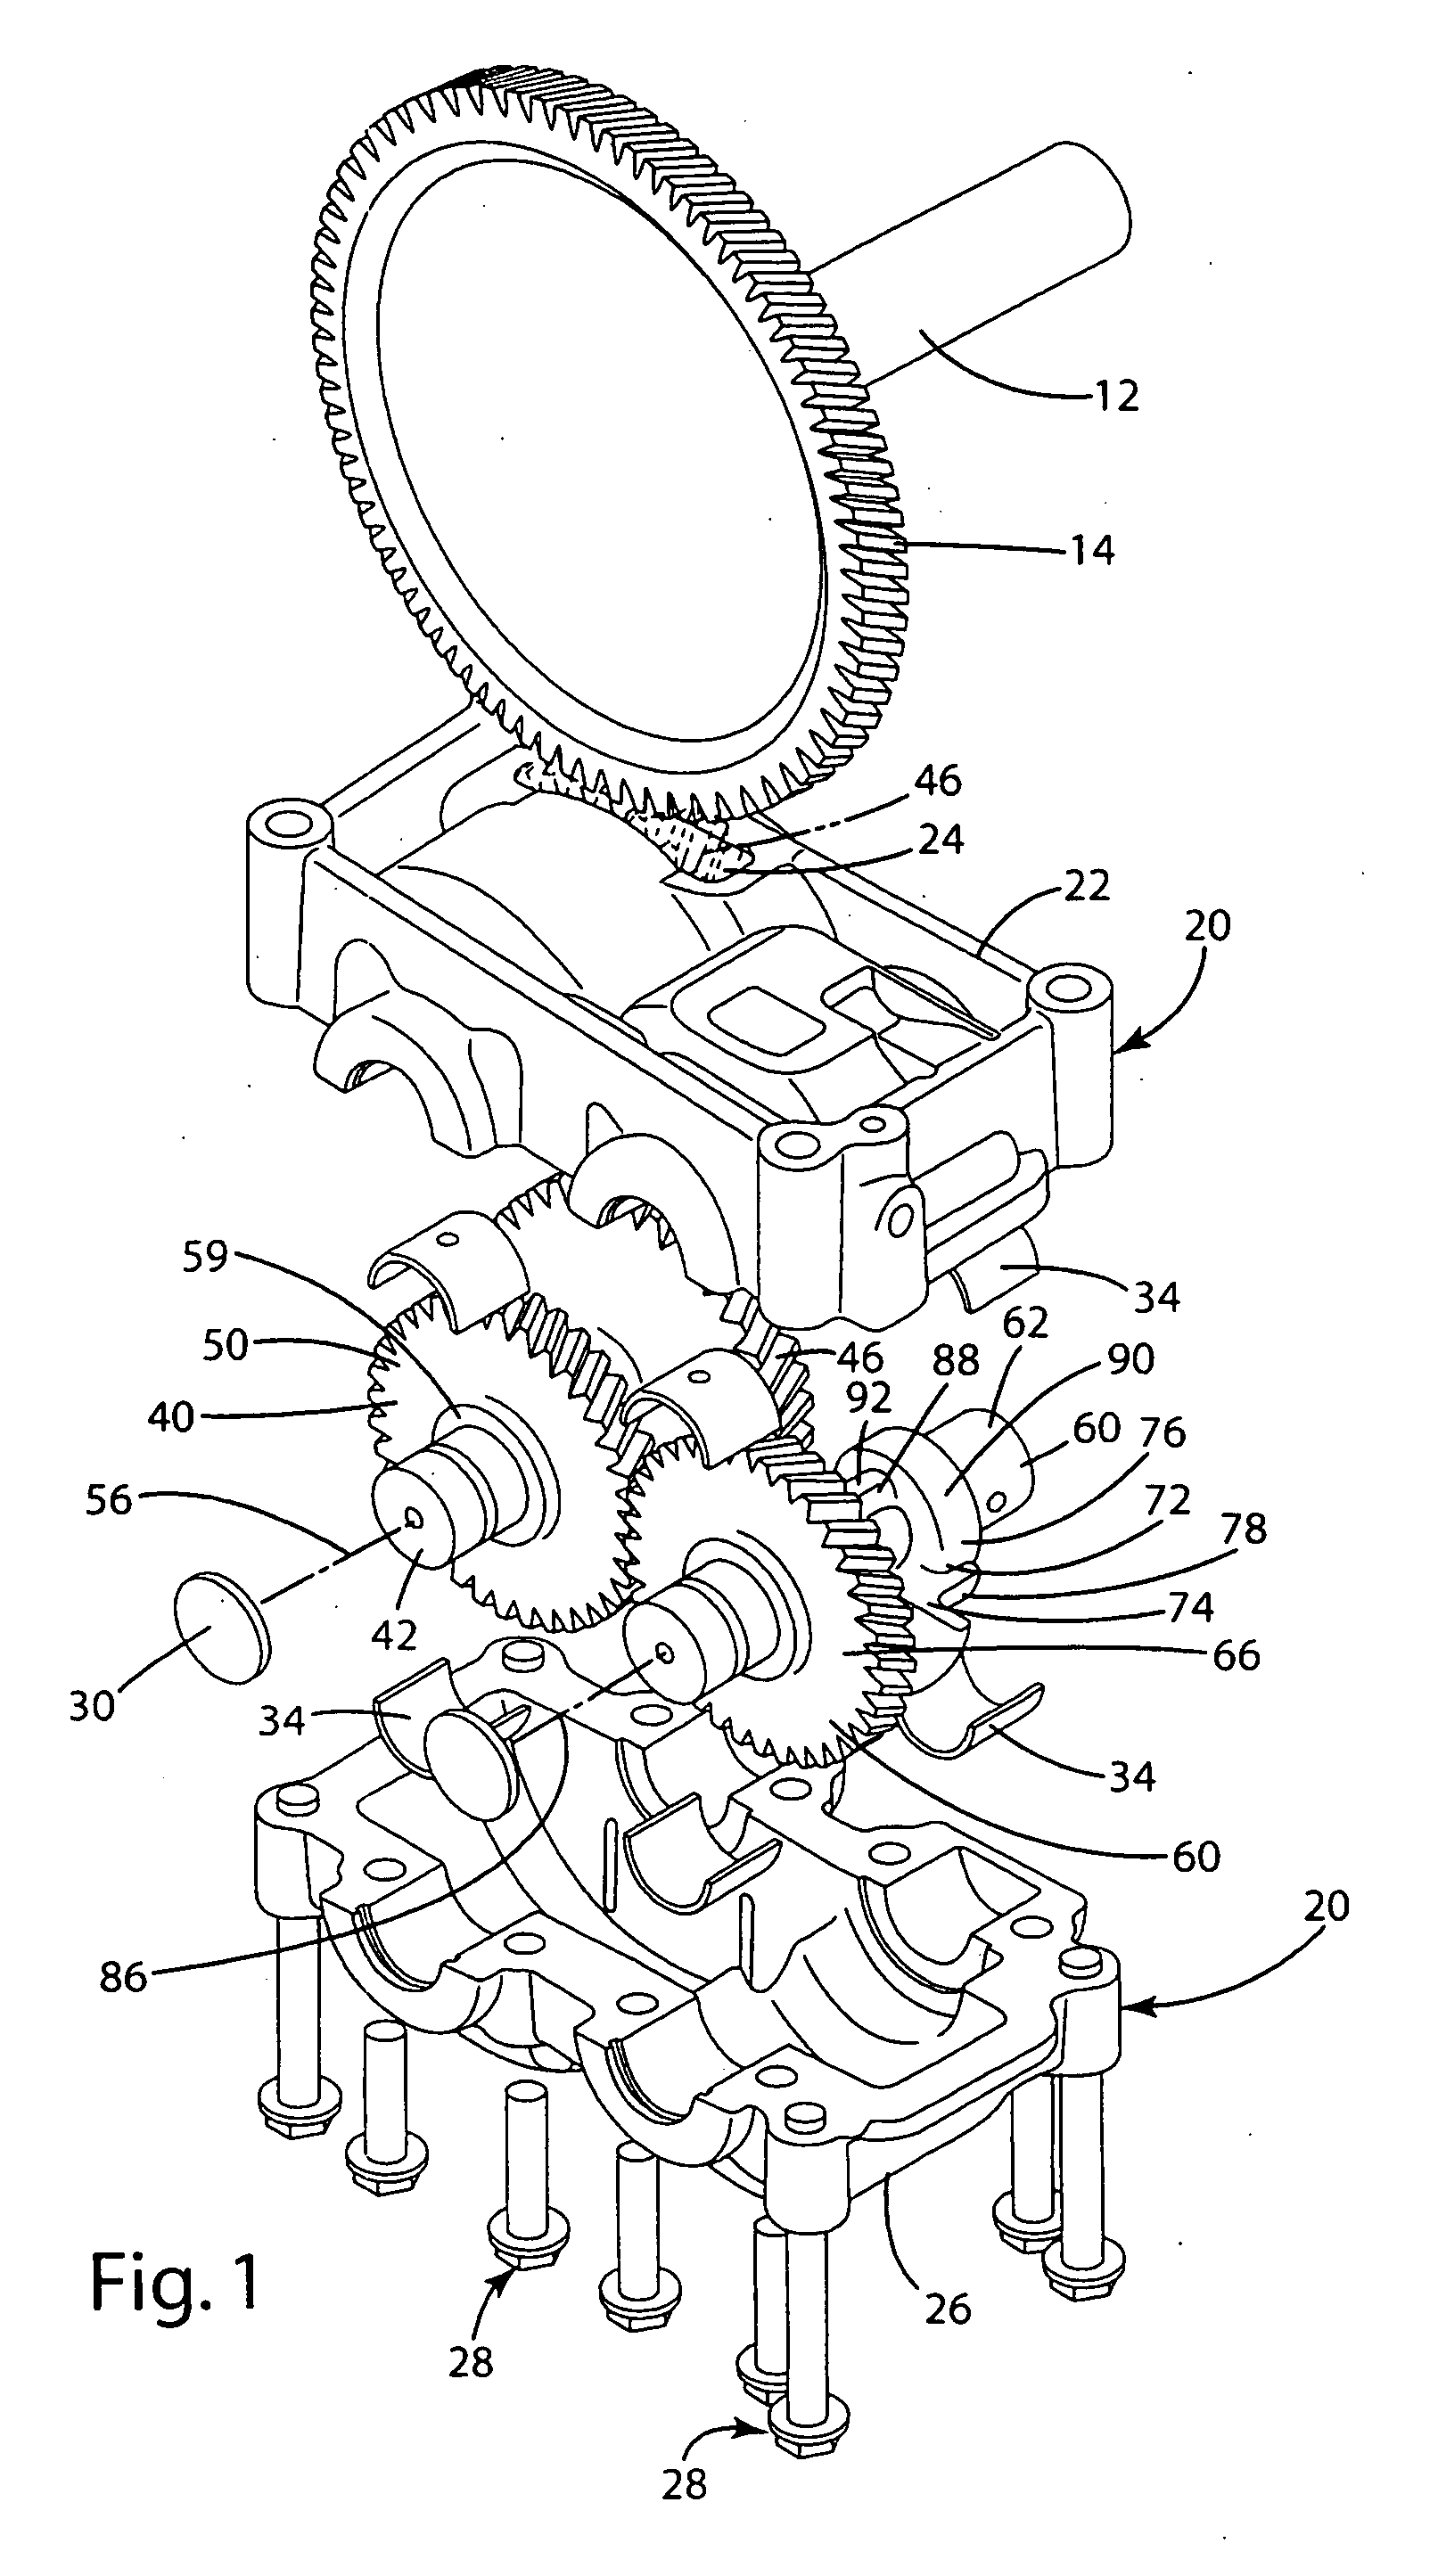 Engine balancer apparatus